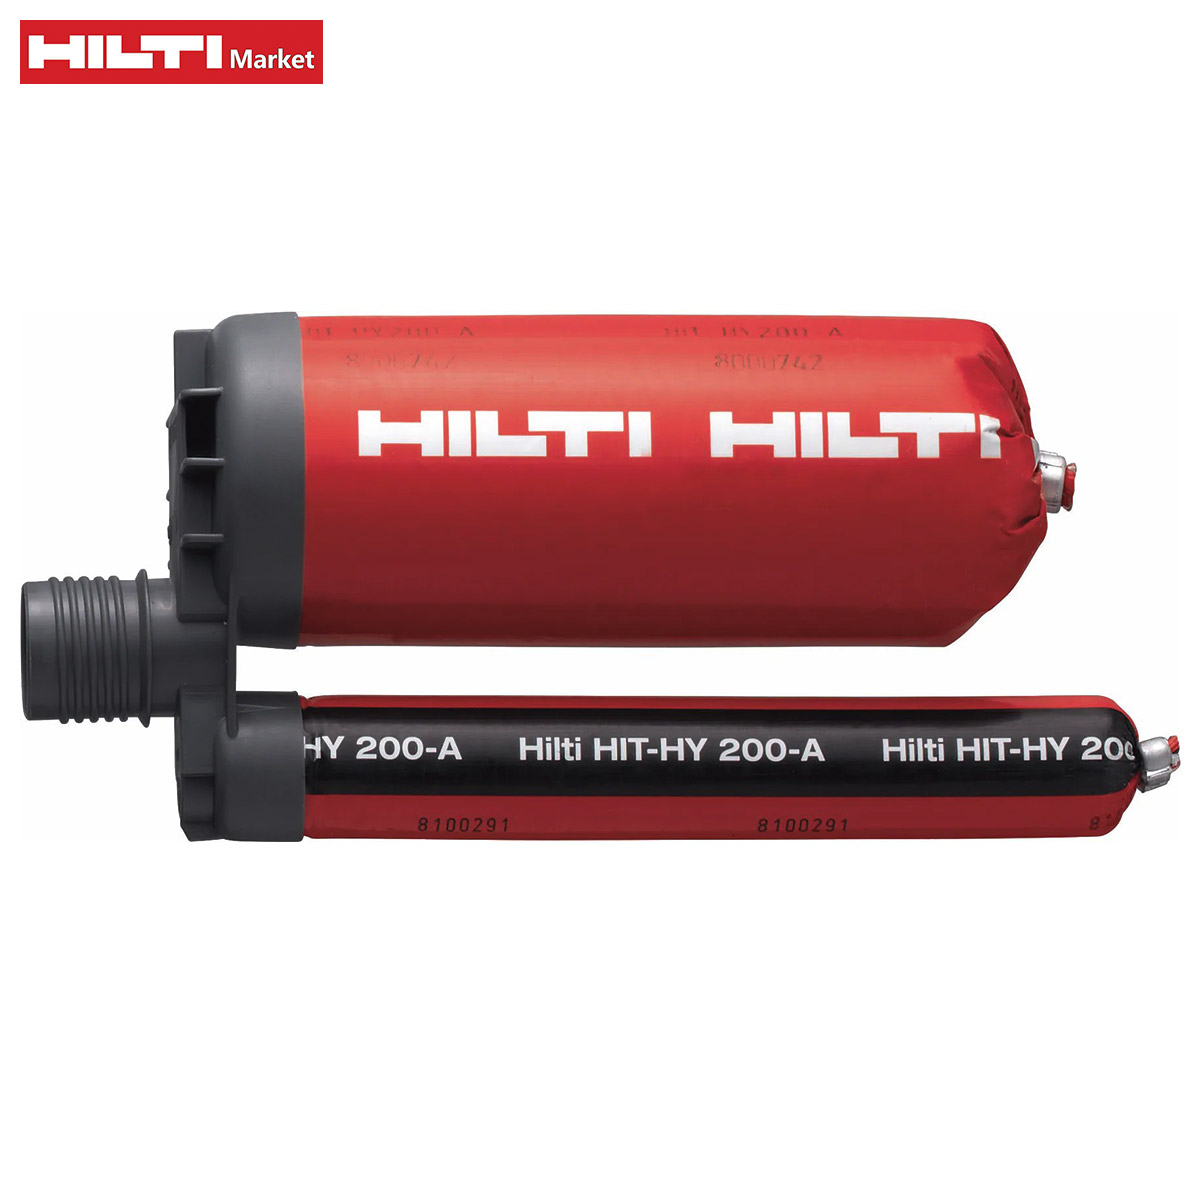 چسب-هیلتی-HILTI-HY-200-A